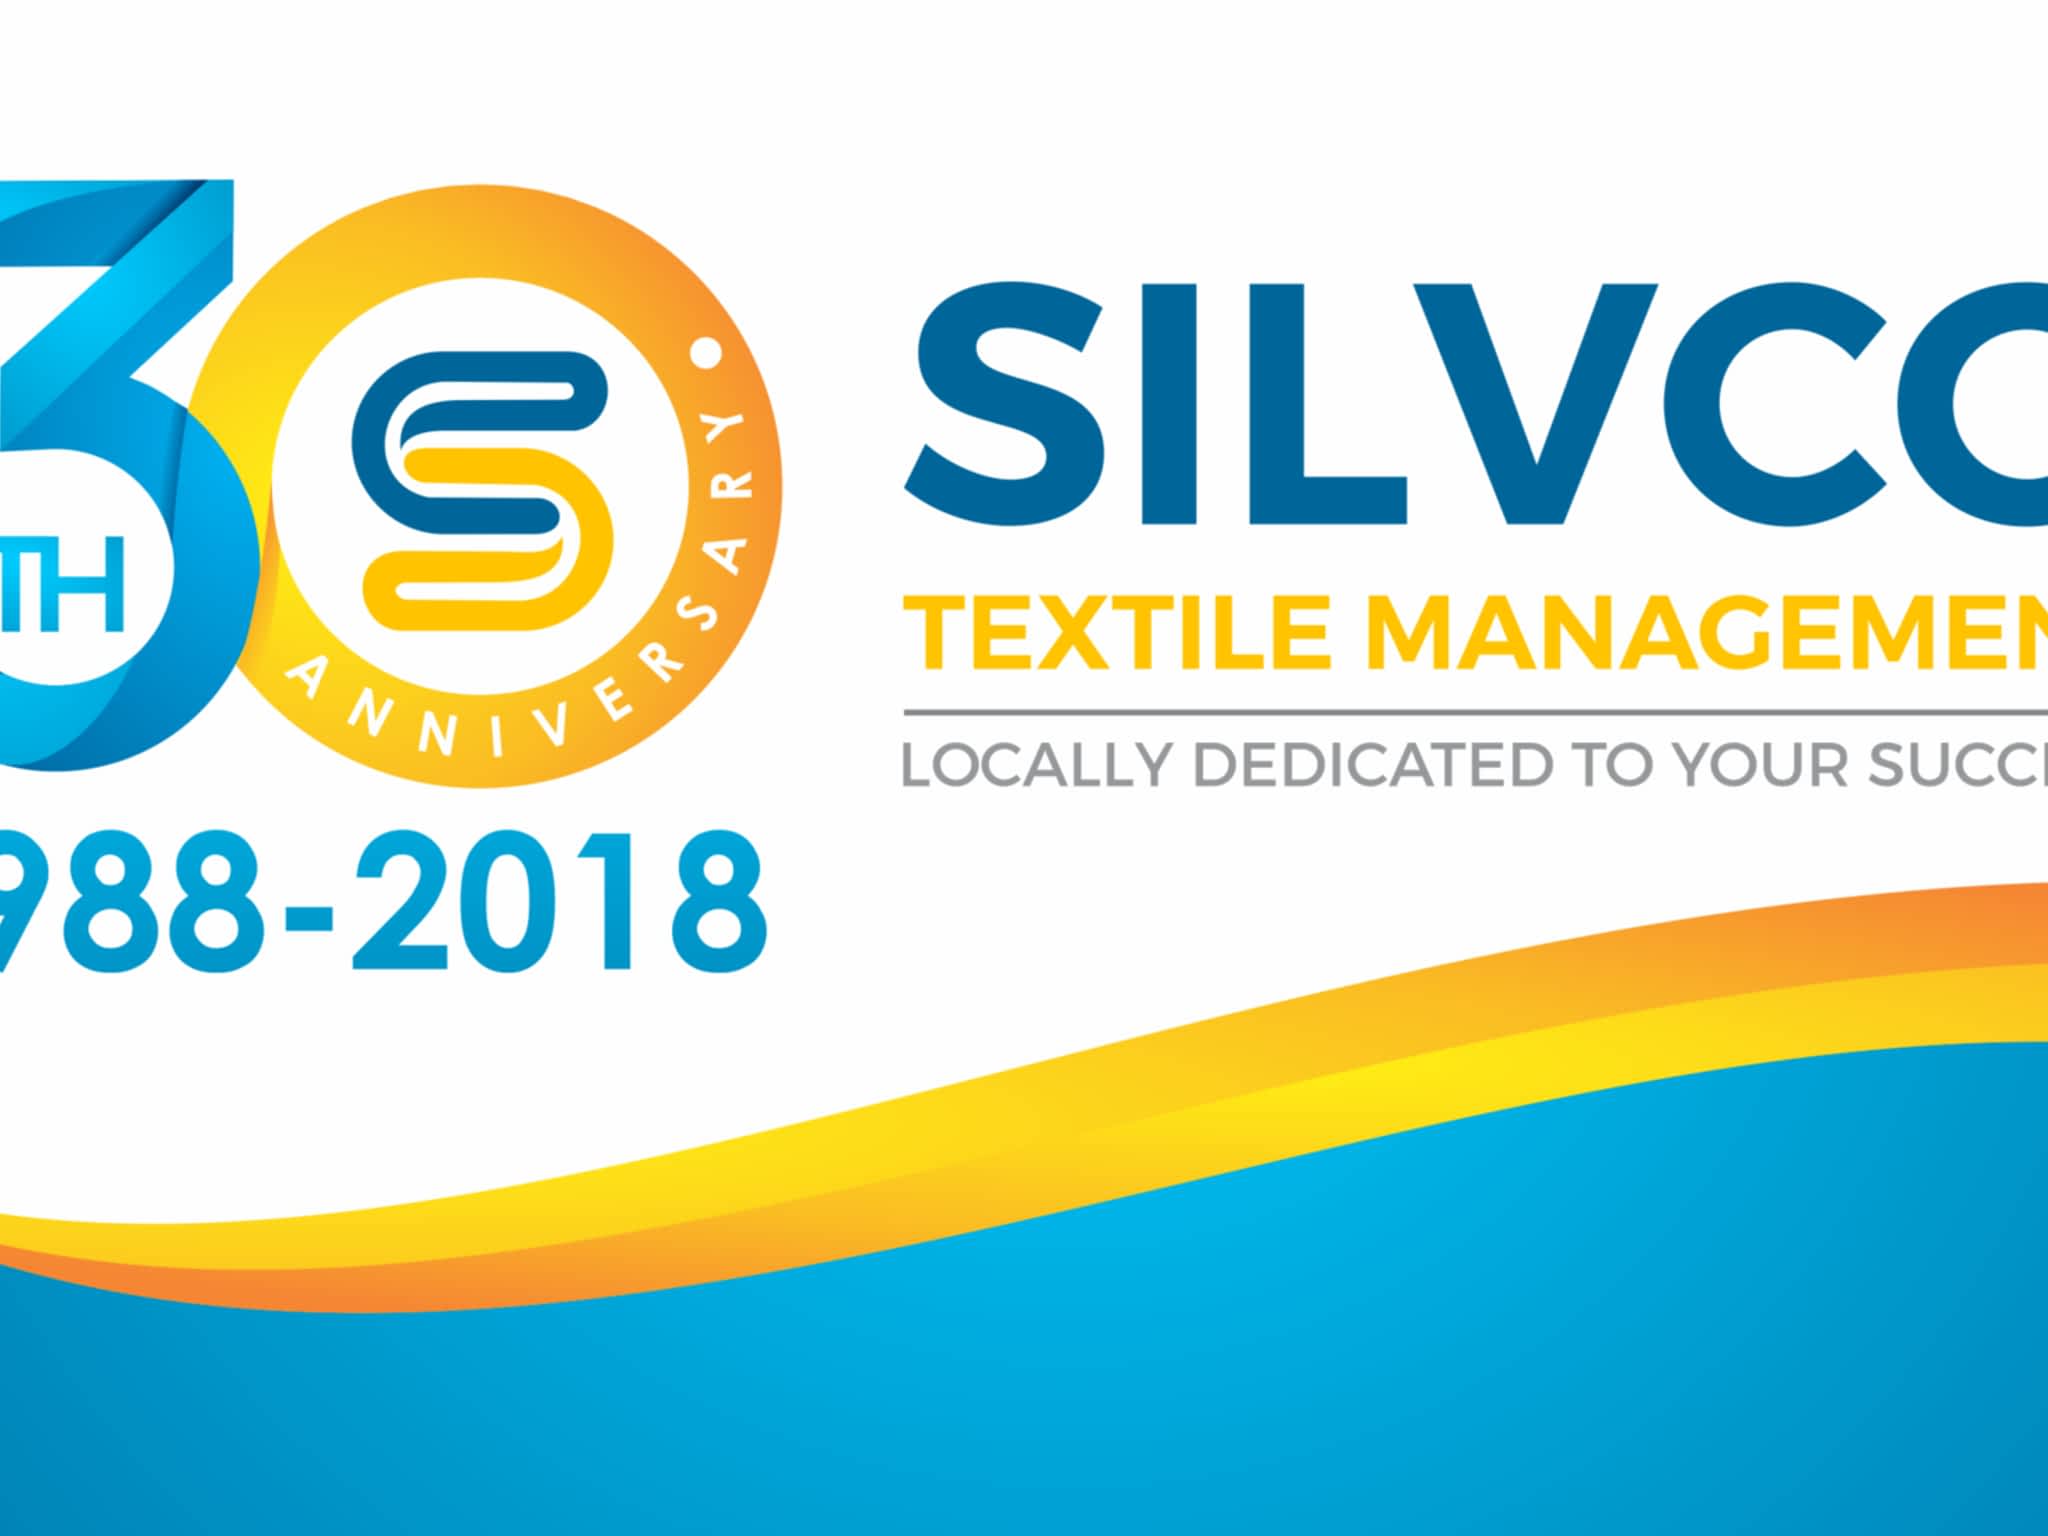 photo Silvco Textile Management